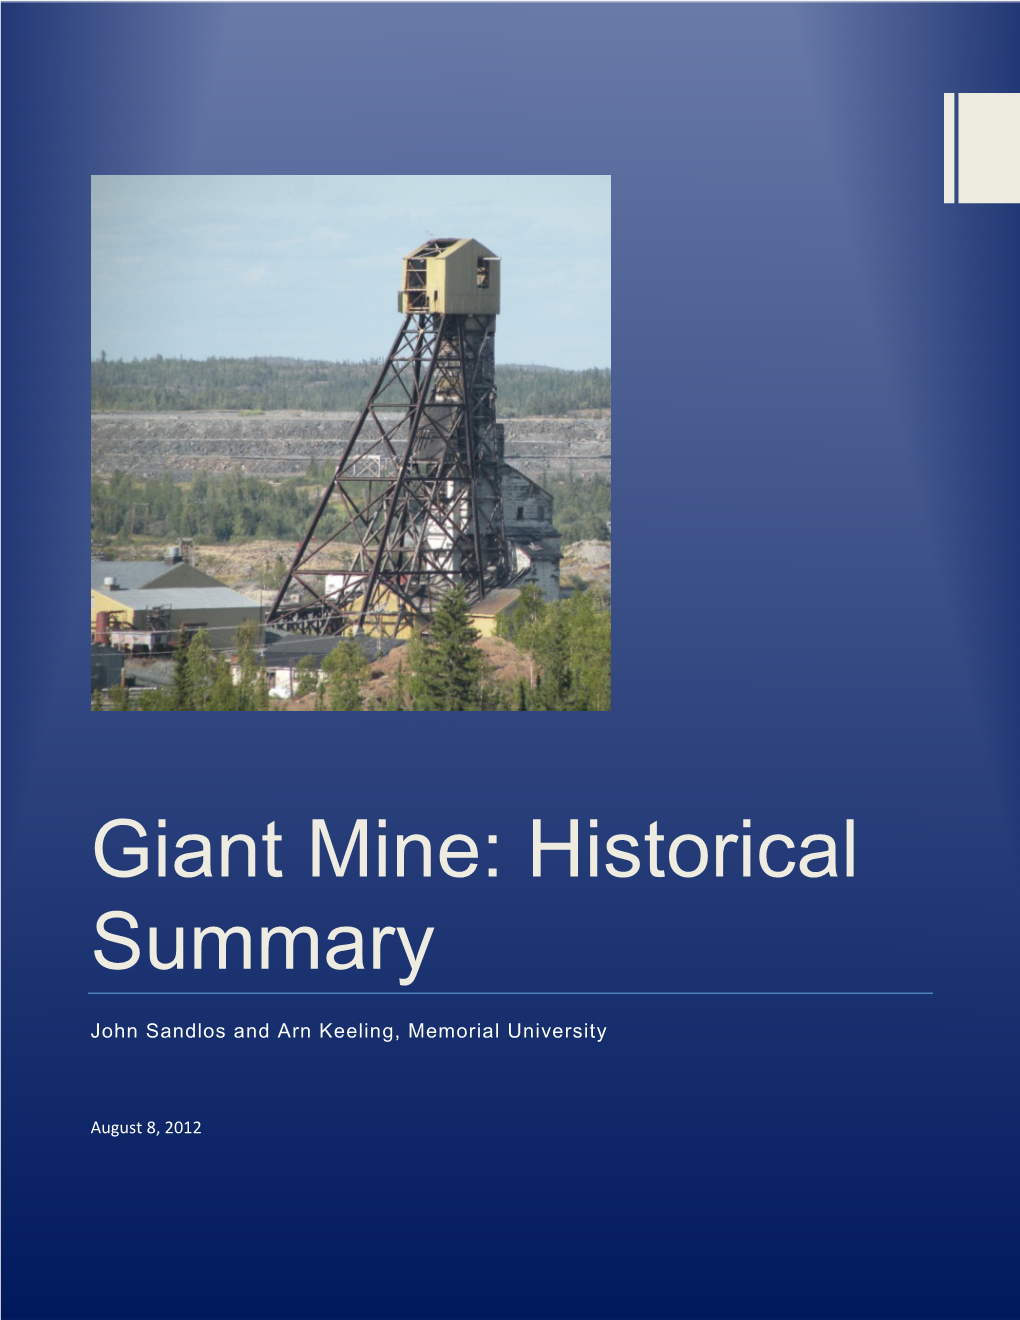 Giant Mine: Historical Summary